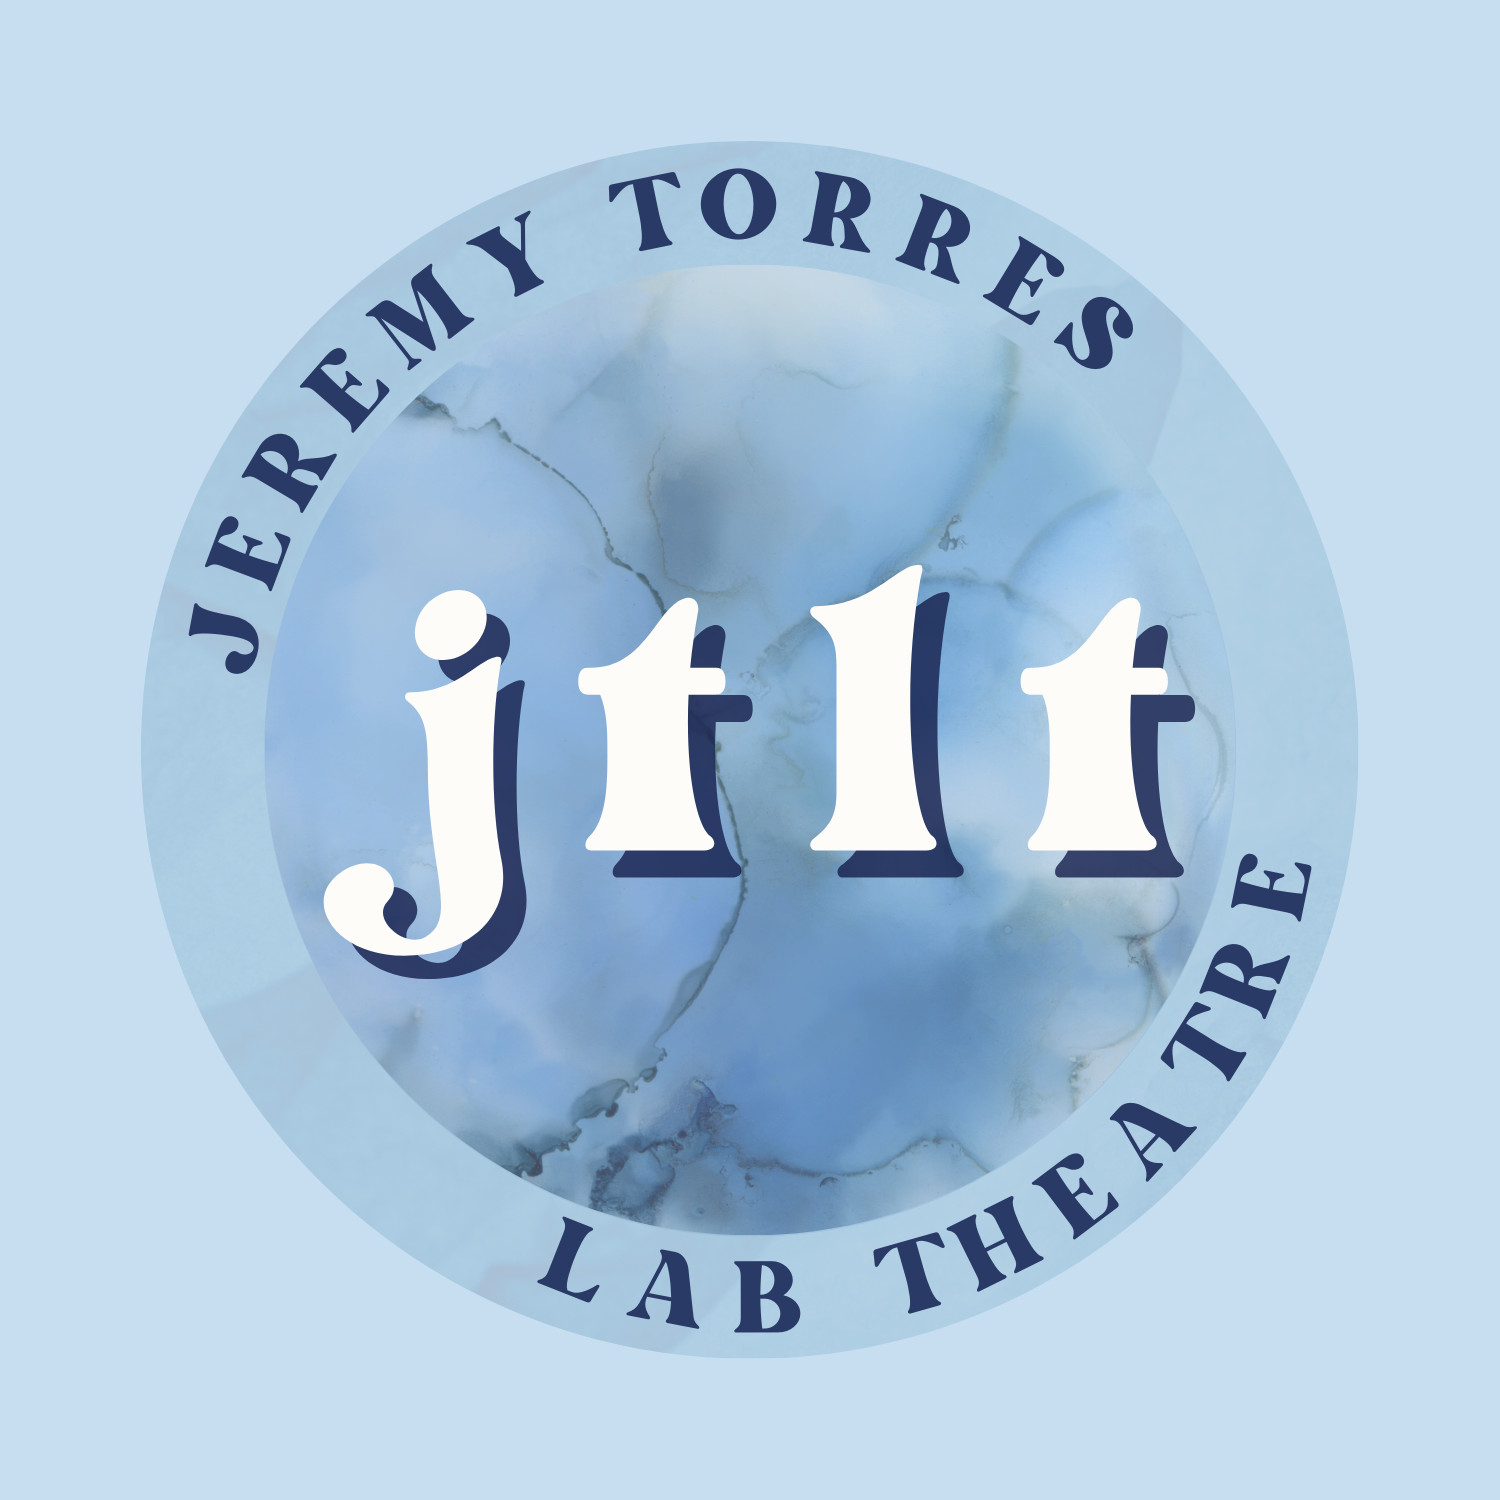 The Jeremy Torres Lab Theatre (JTLT)